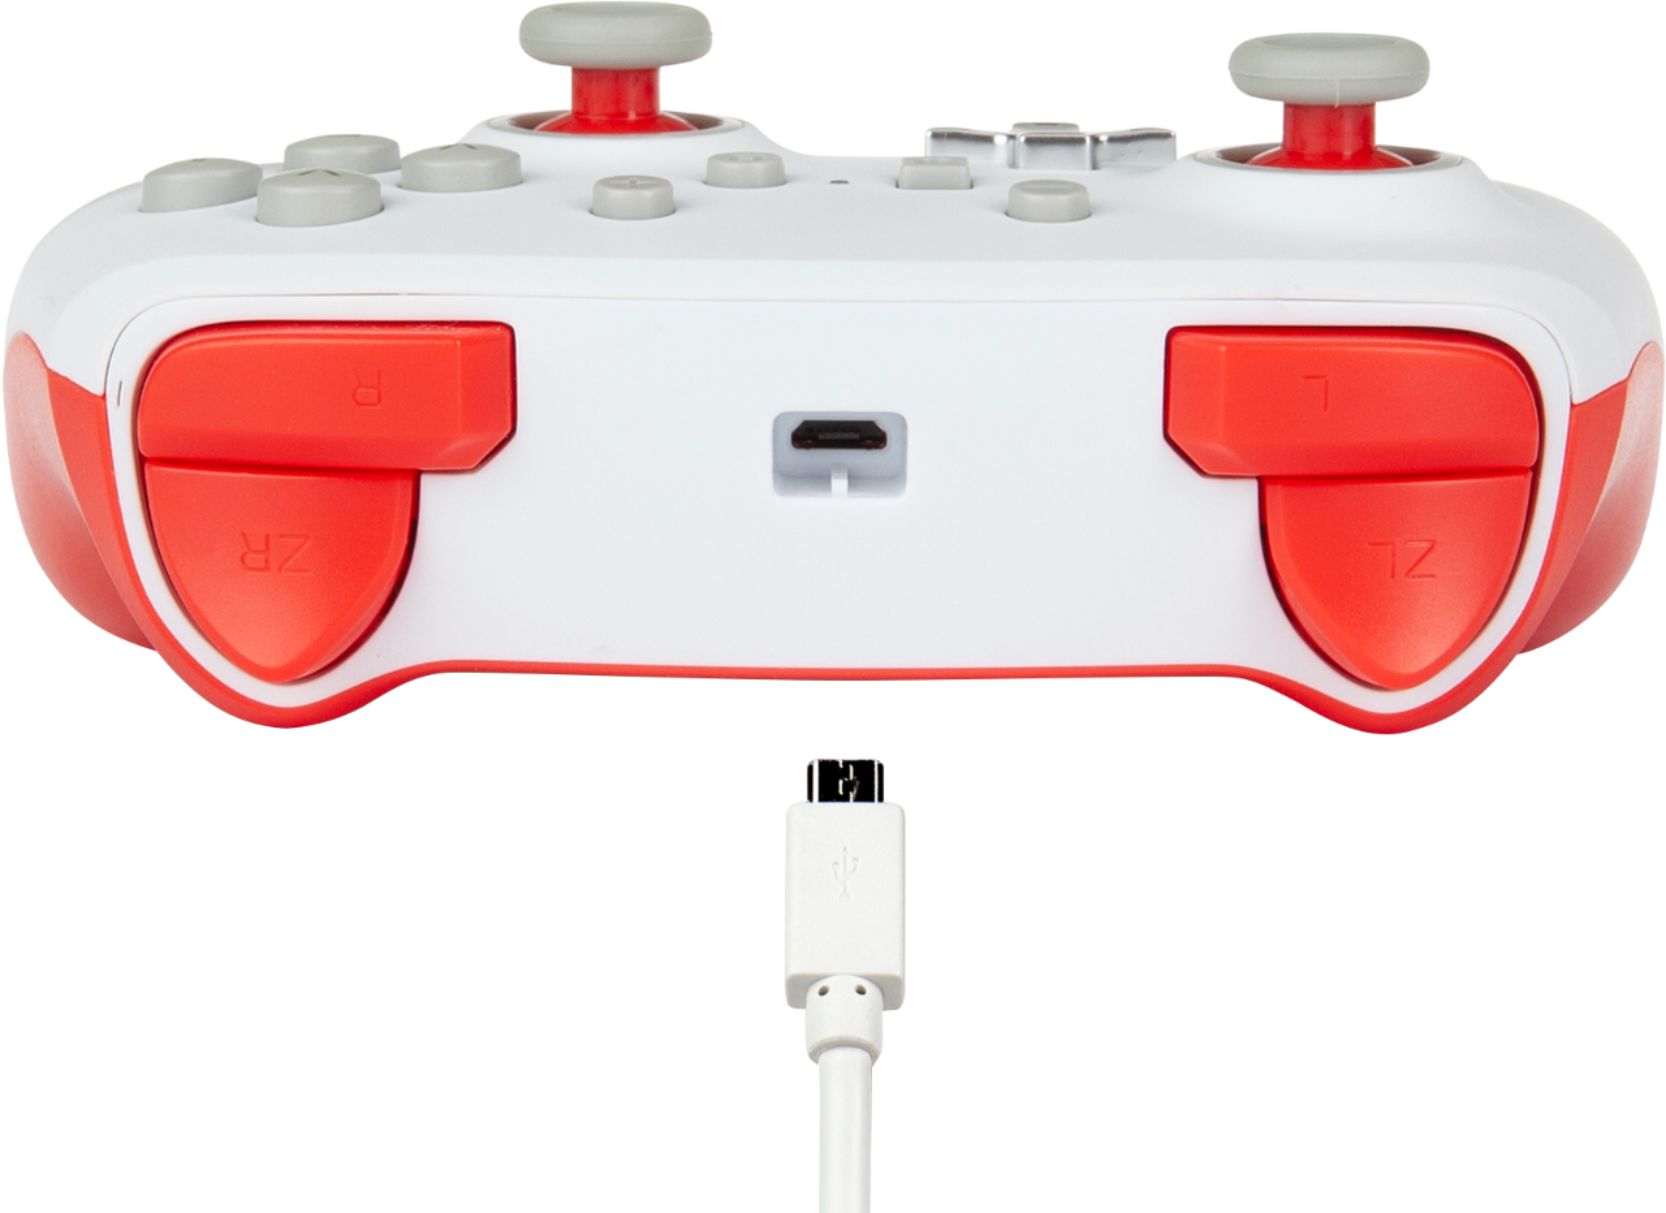 Best Buy: PowerA Enhanced Wired Controller for Nintendo Switch Mario Pop  Art 1522660-01